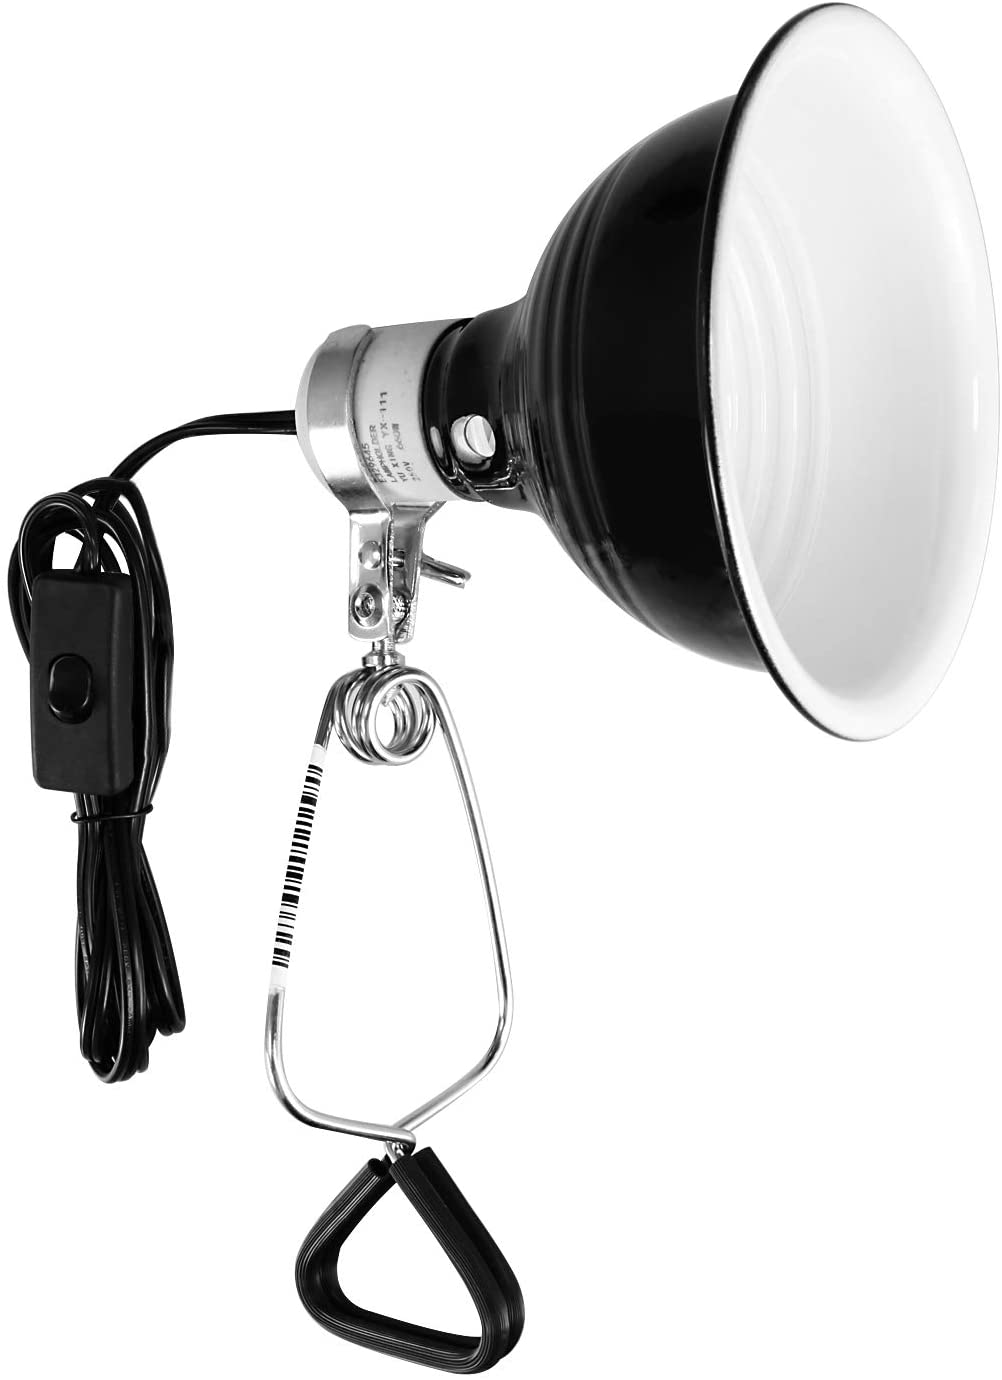 Simple Deluxe PTDMLTCLAMPS Reptile Dome Light Clamp Lamp Fixture with 5.5 Inch Aluminum Reflector for Amphibian Pet Terrariums Habitat (No Bulb Included), Black , 60W Dome Light